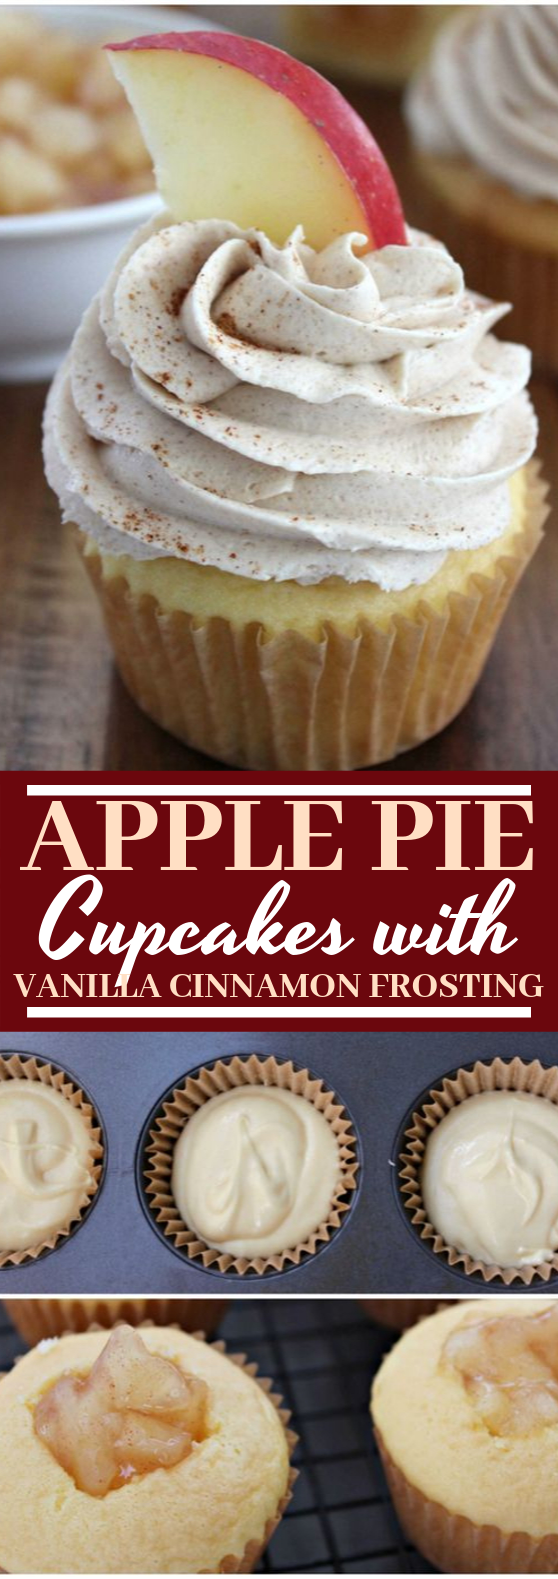 Apple Pie Cupcakes with Vanilla Cinnamon Frosting #desserts #cake